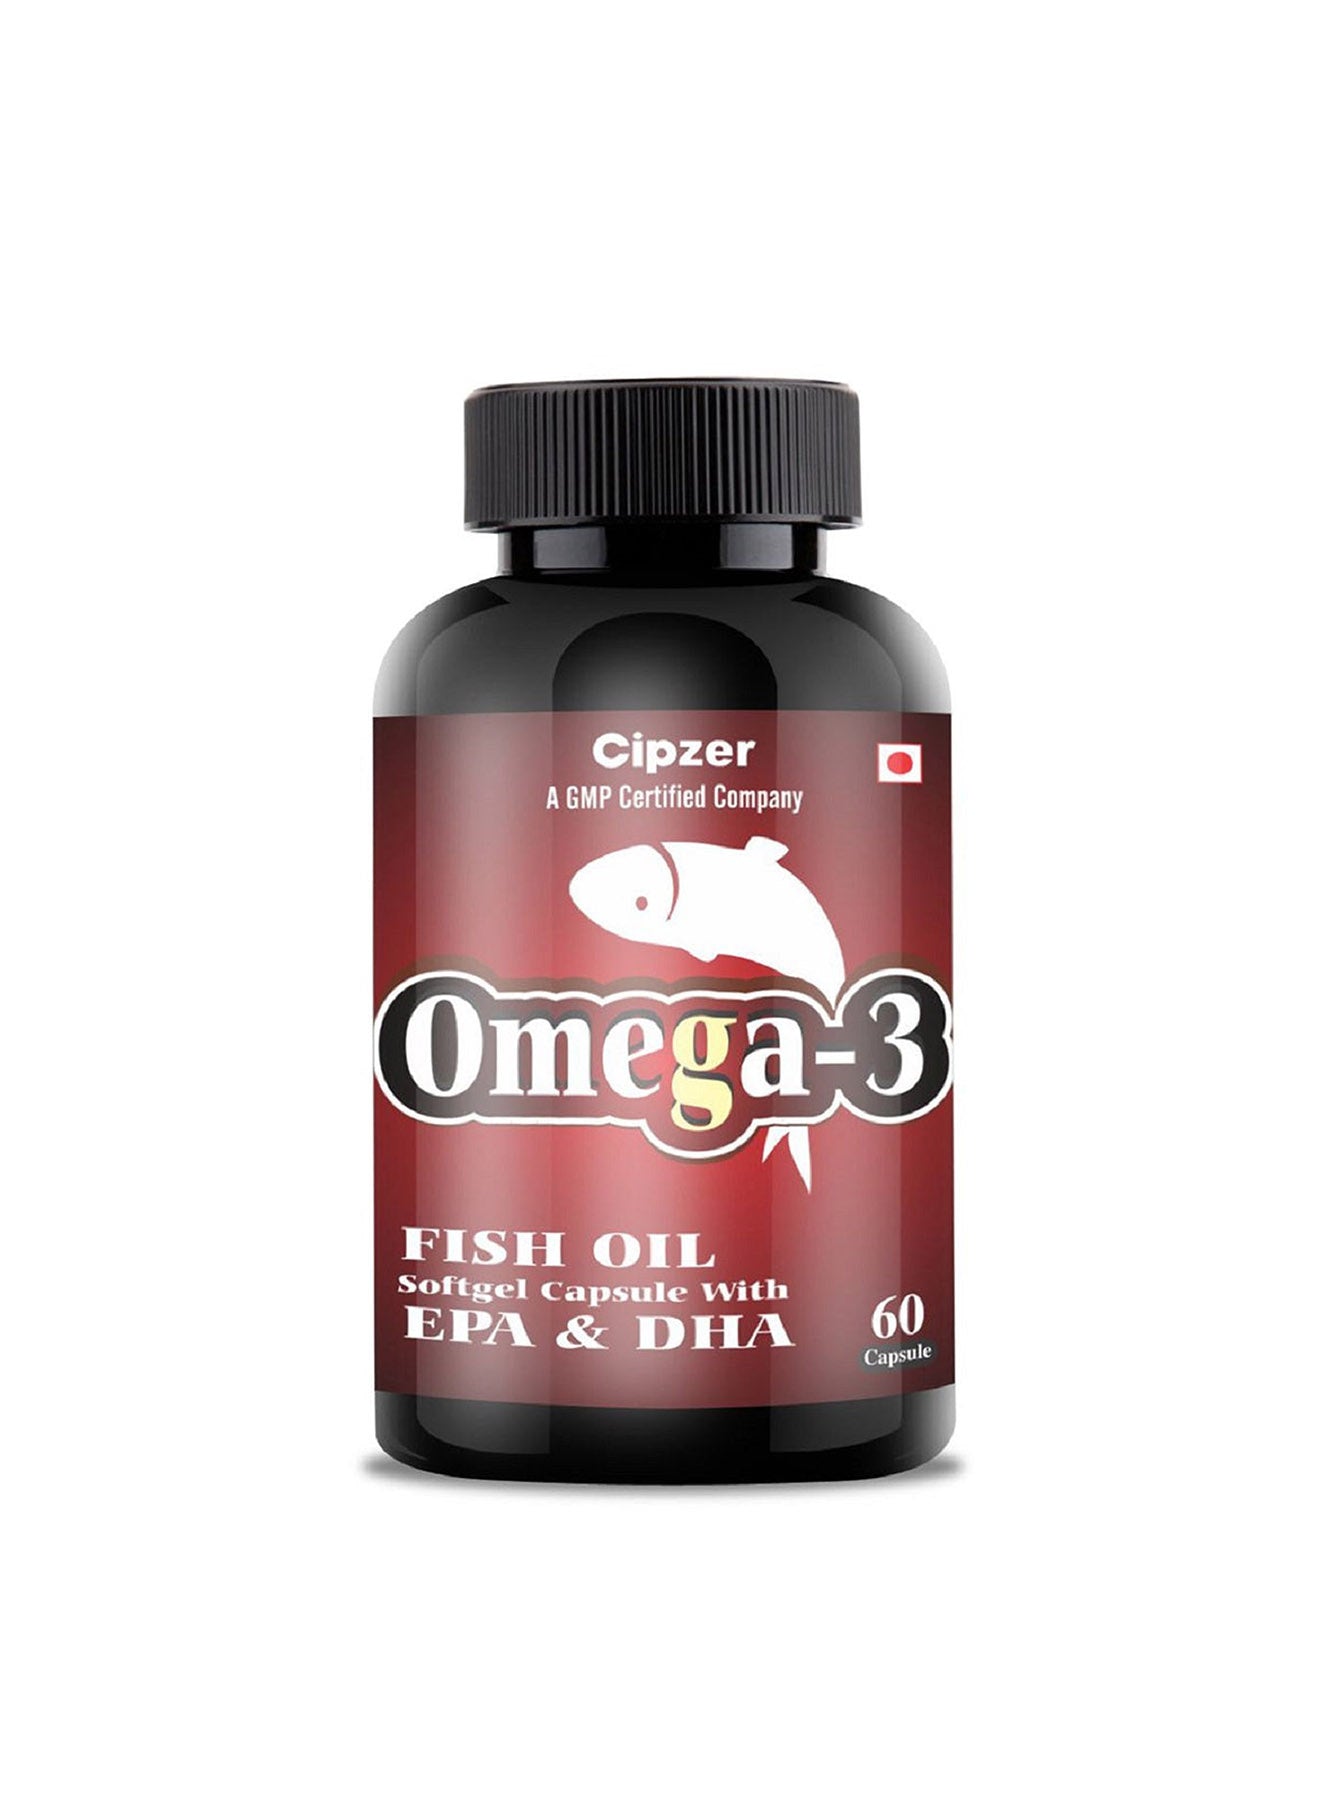 Cipzer Omega 3 Fish Oil SoftGel Capsule  1000 mg 60 Capsules Value Pack of 3 